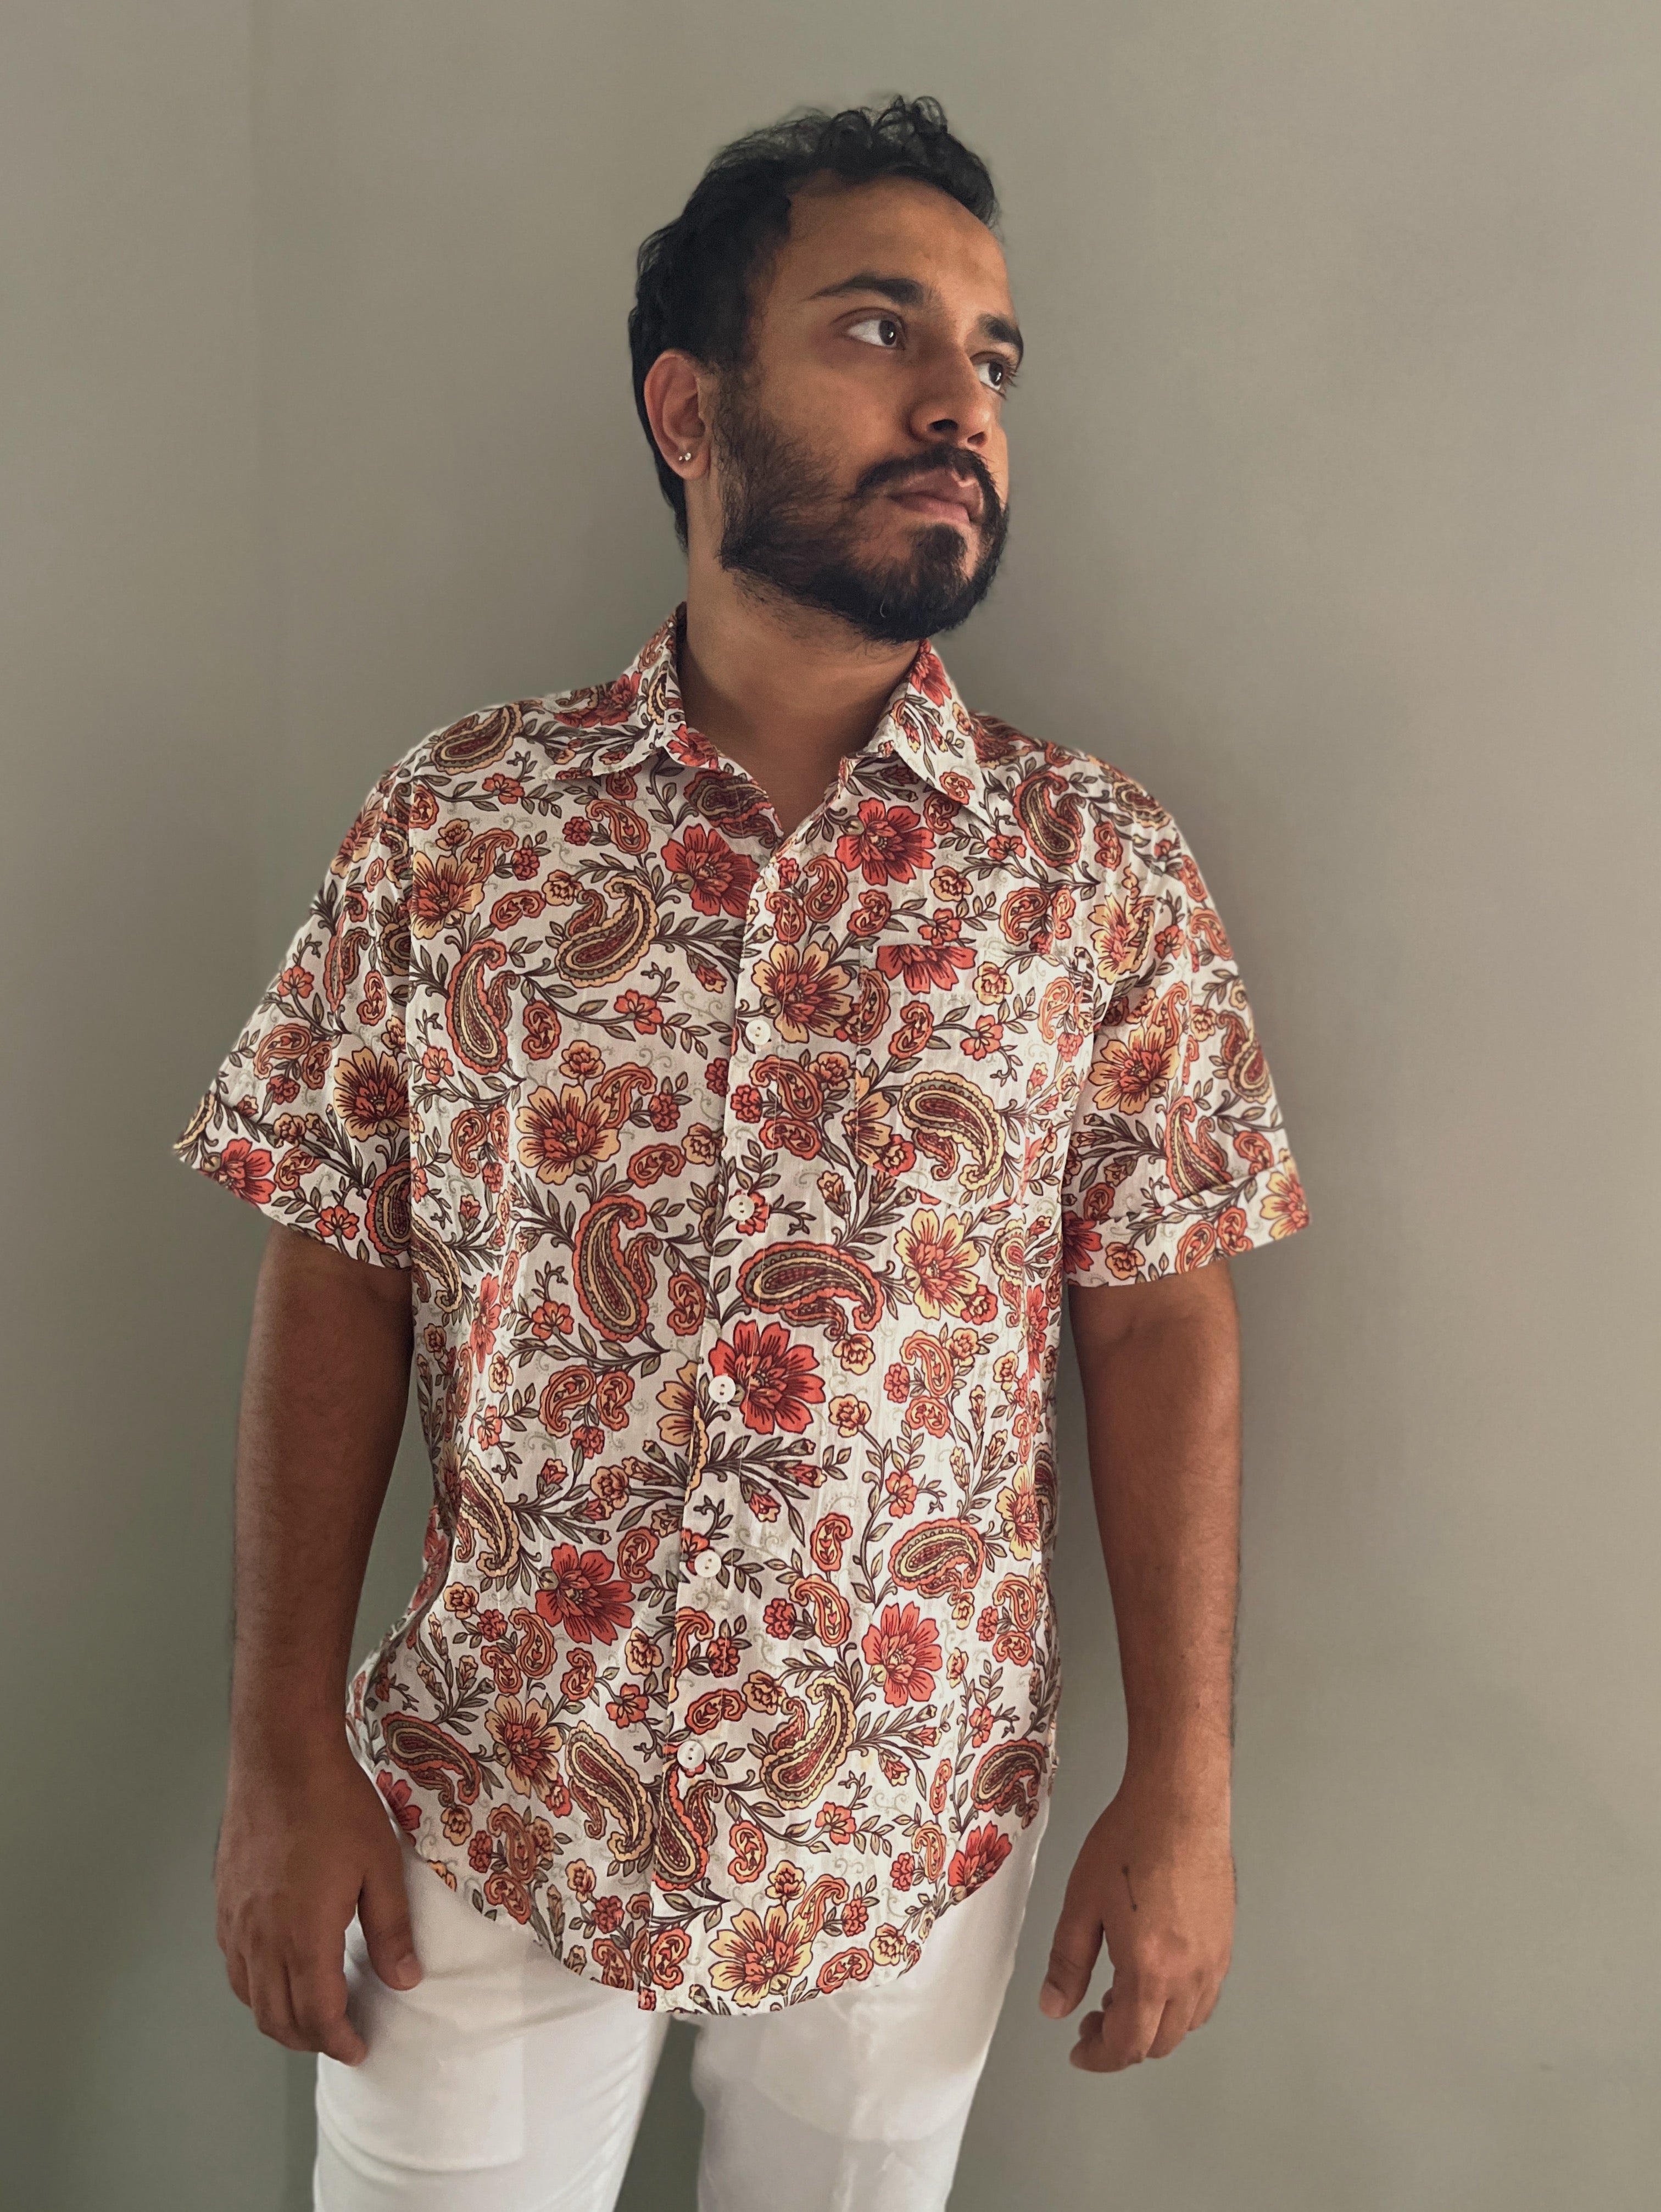 floral print shirts